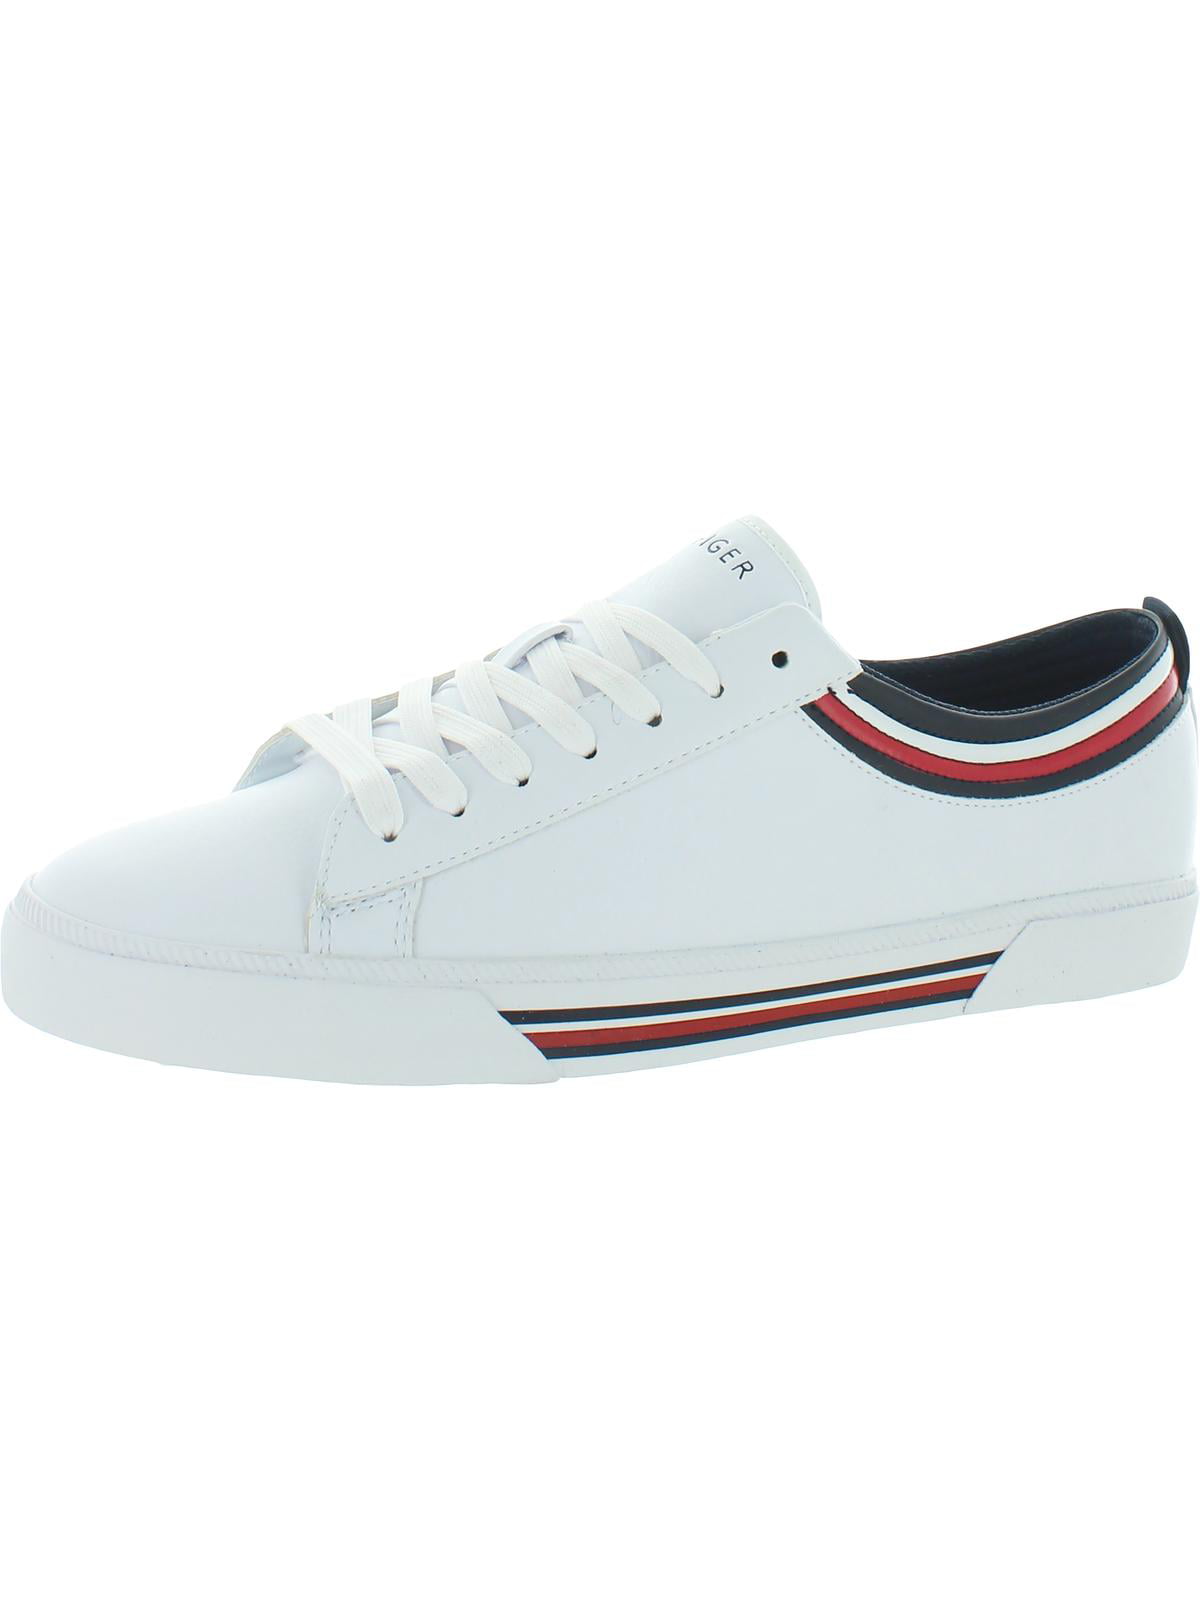 Tommy Hilfiger Mens Fashion Sneakers White 12 Medium (D) - Walmart.com